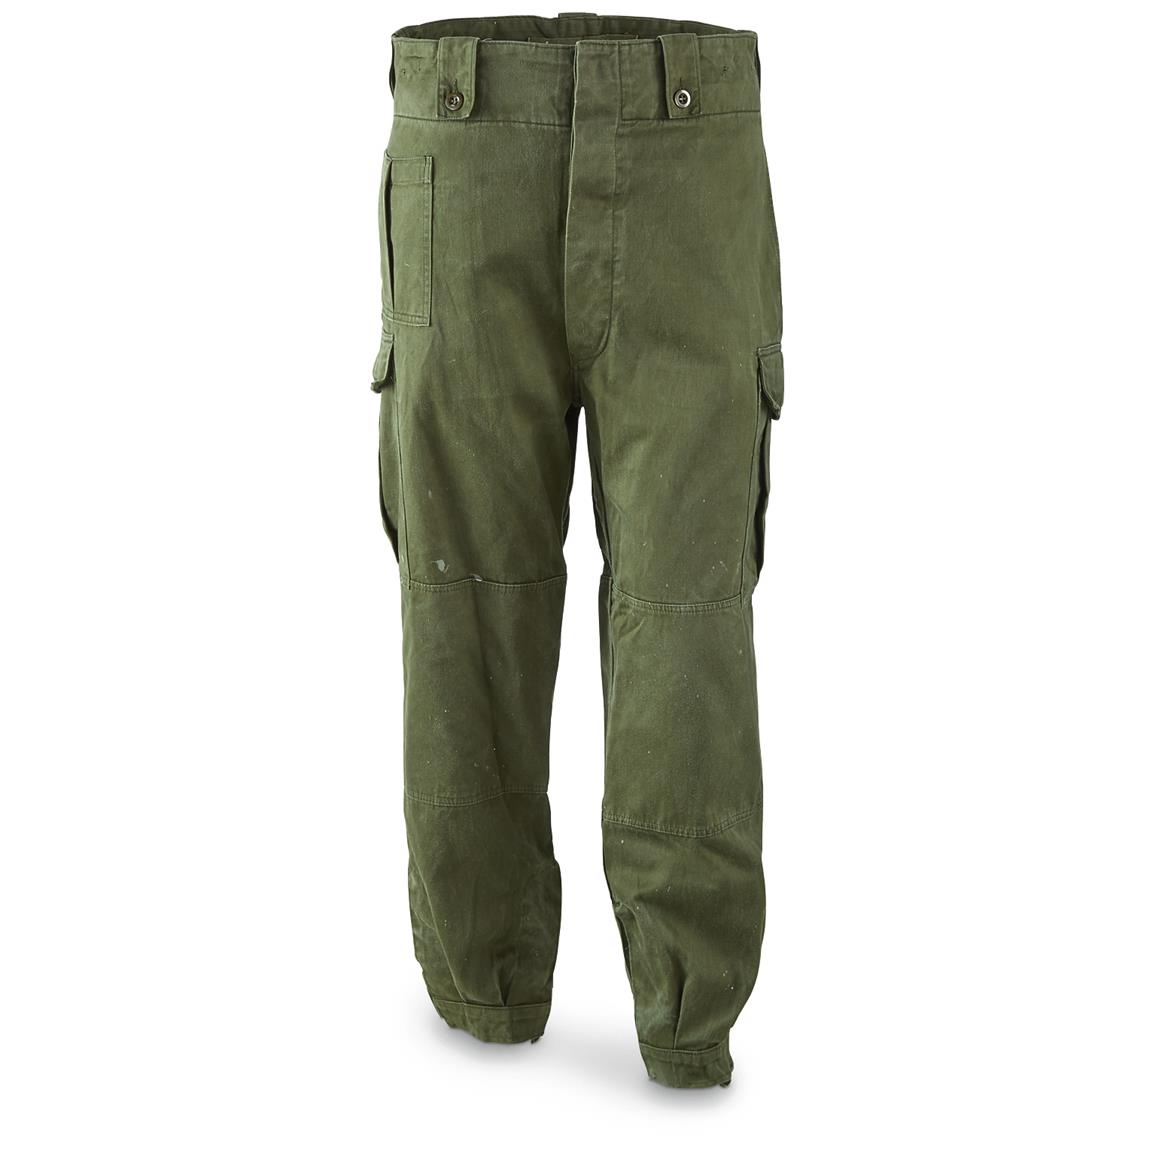 Belgian Military Surplus Combat Pants, Used